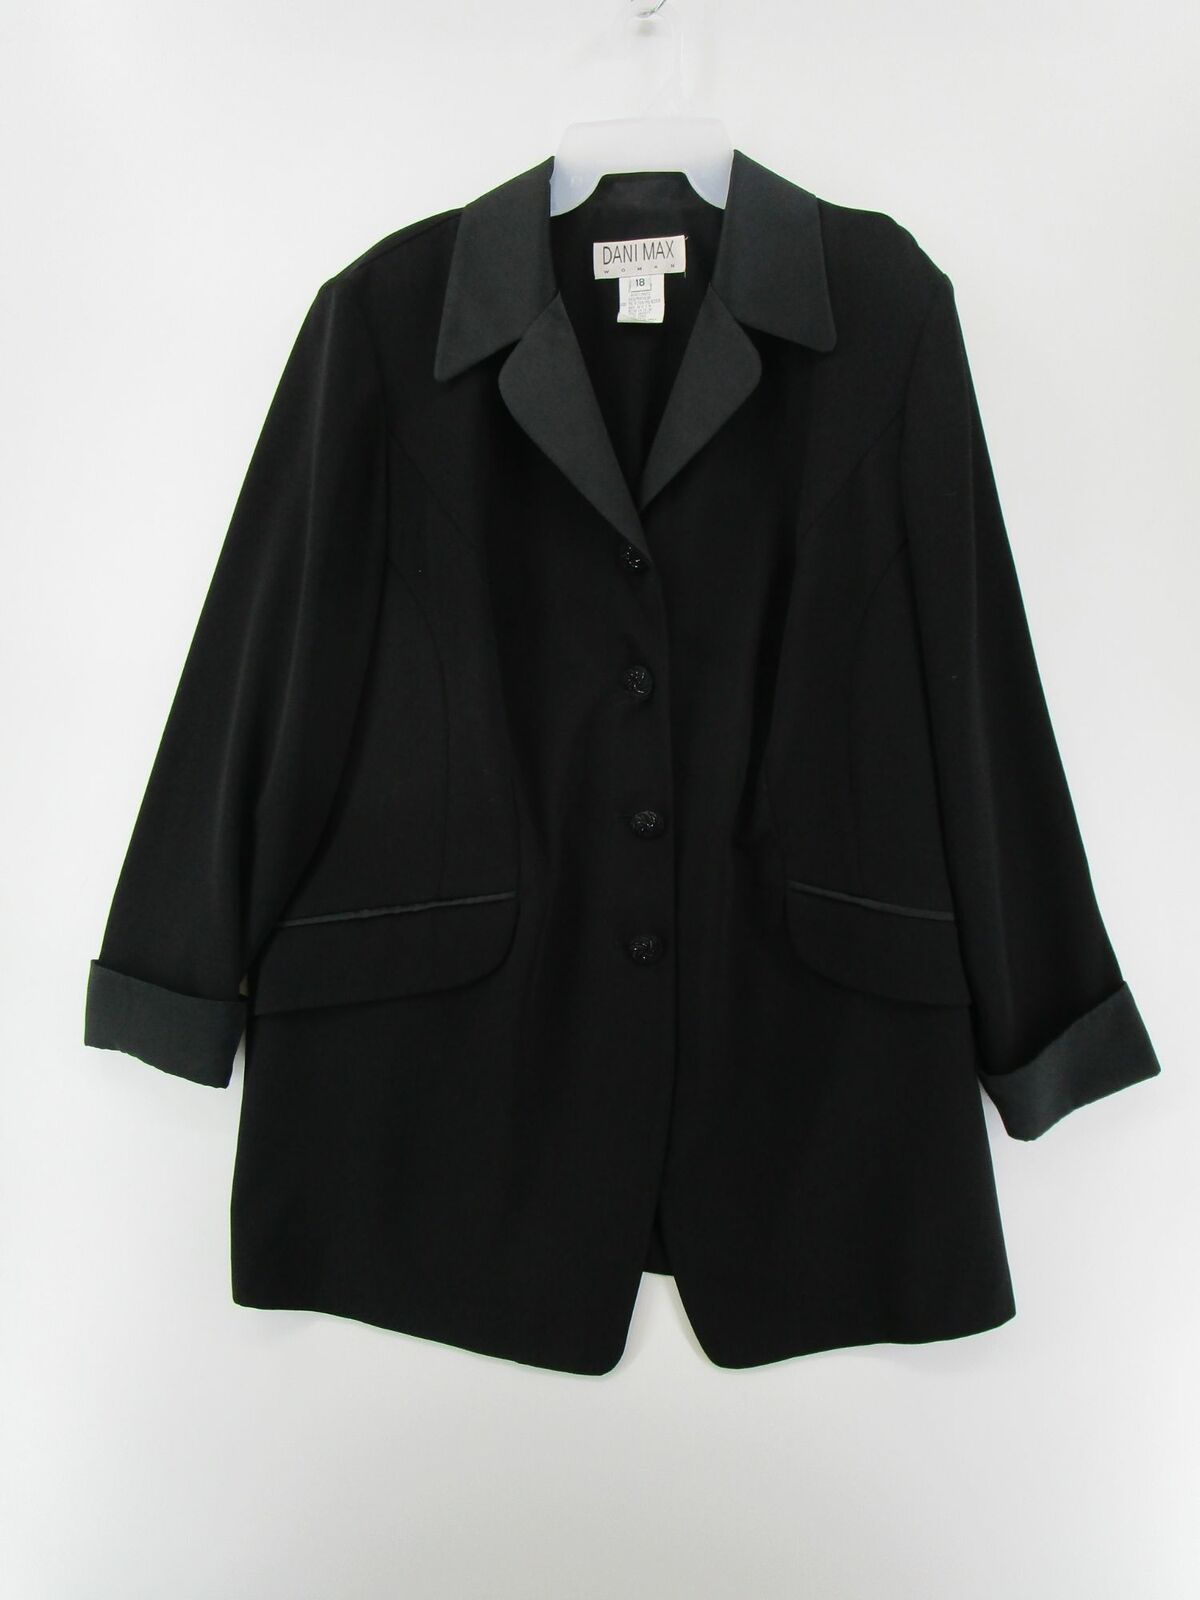 Dani Max Womens 18 Buttons Up Classic Suit Jacket Black | eBay